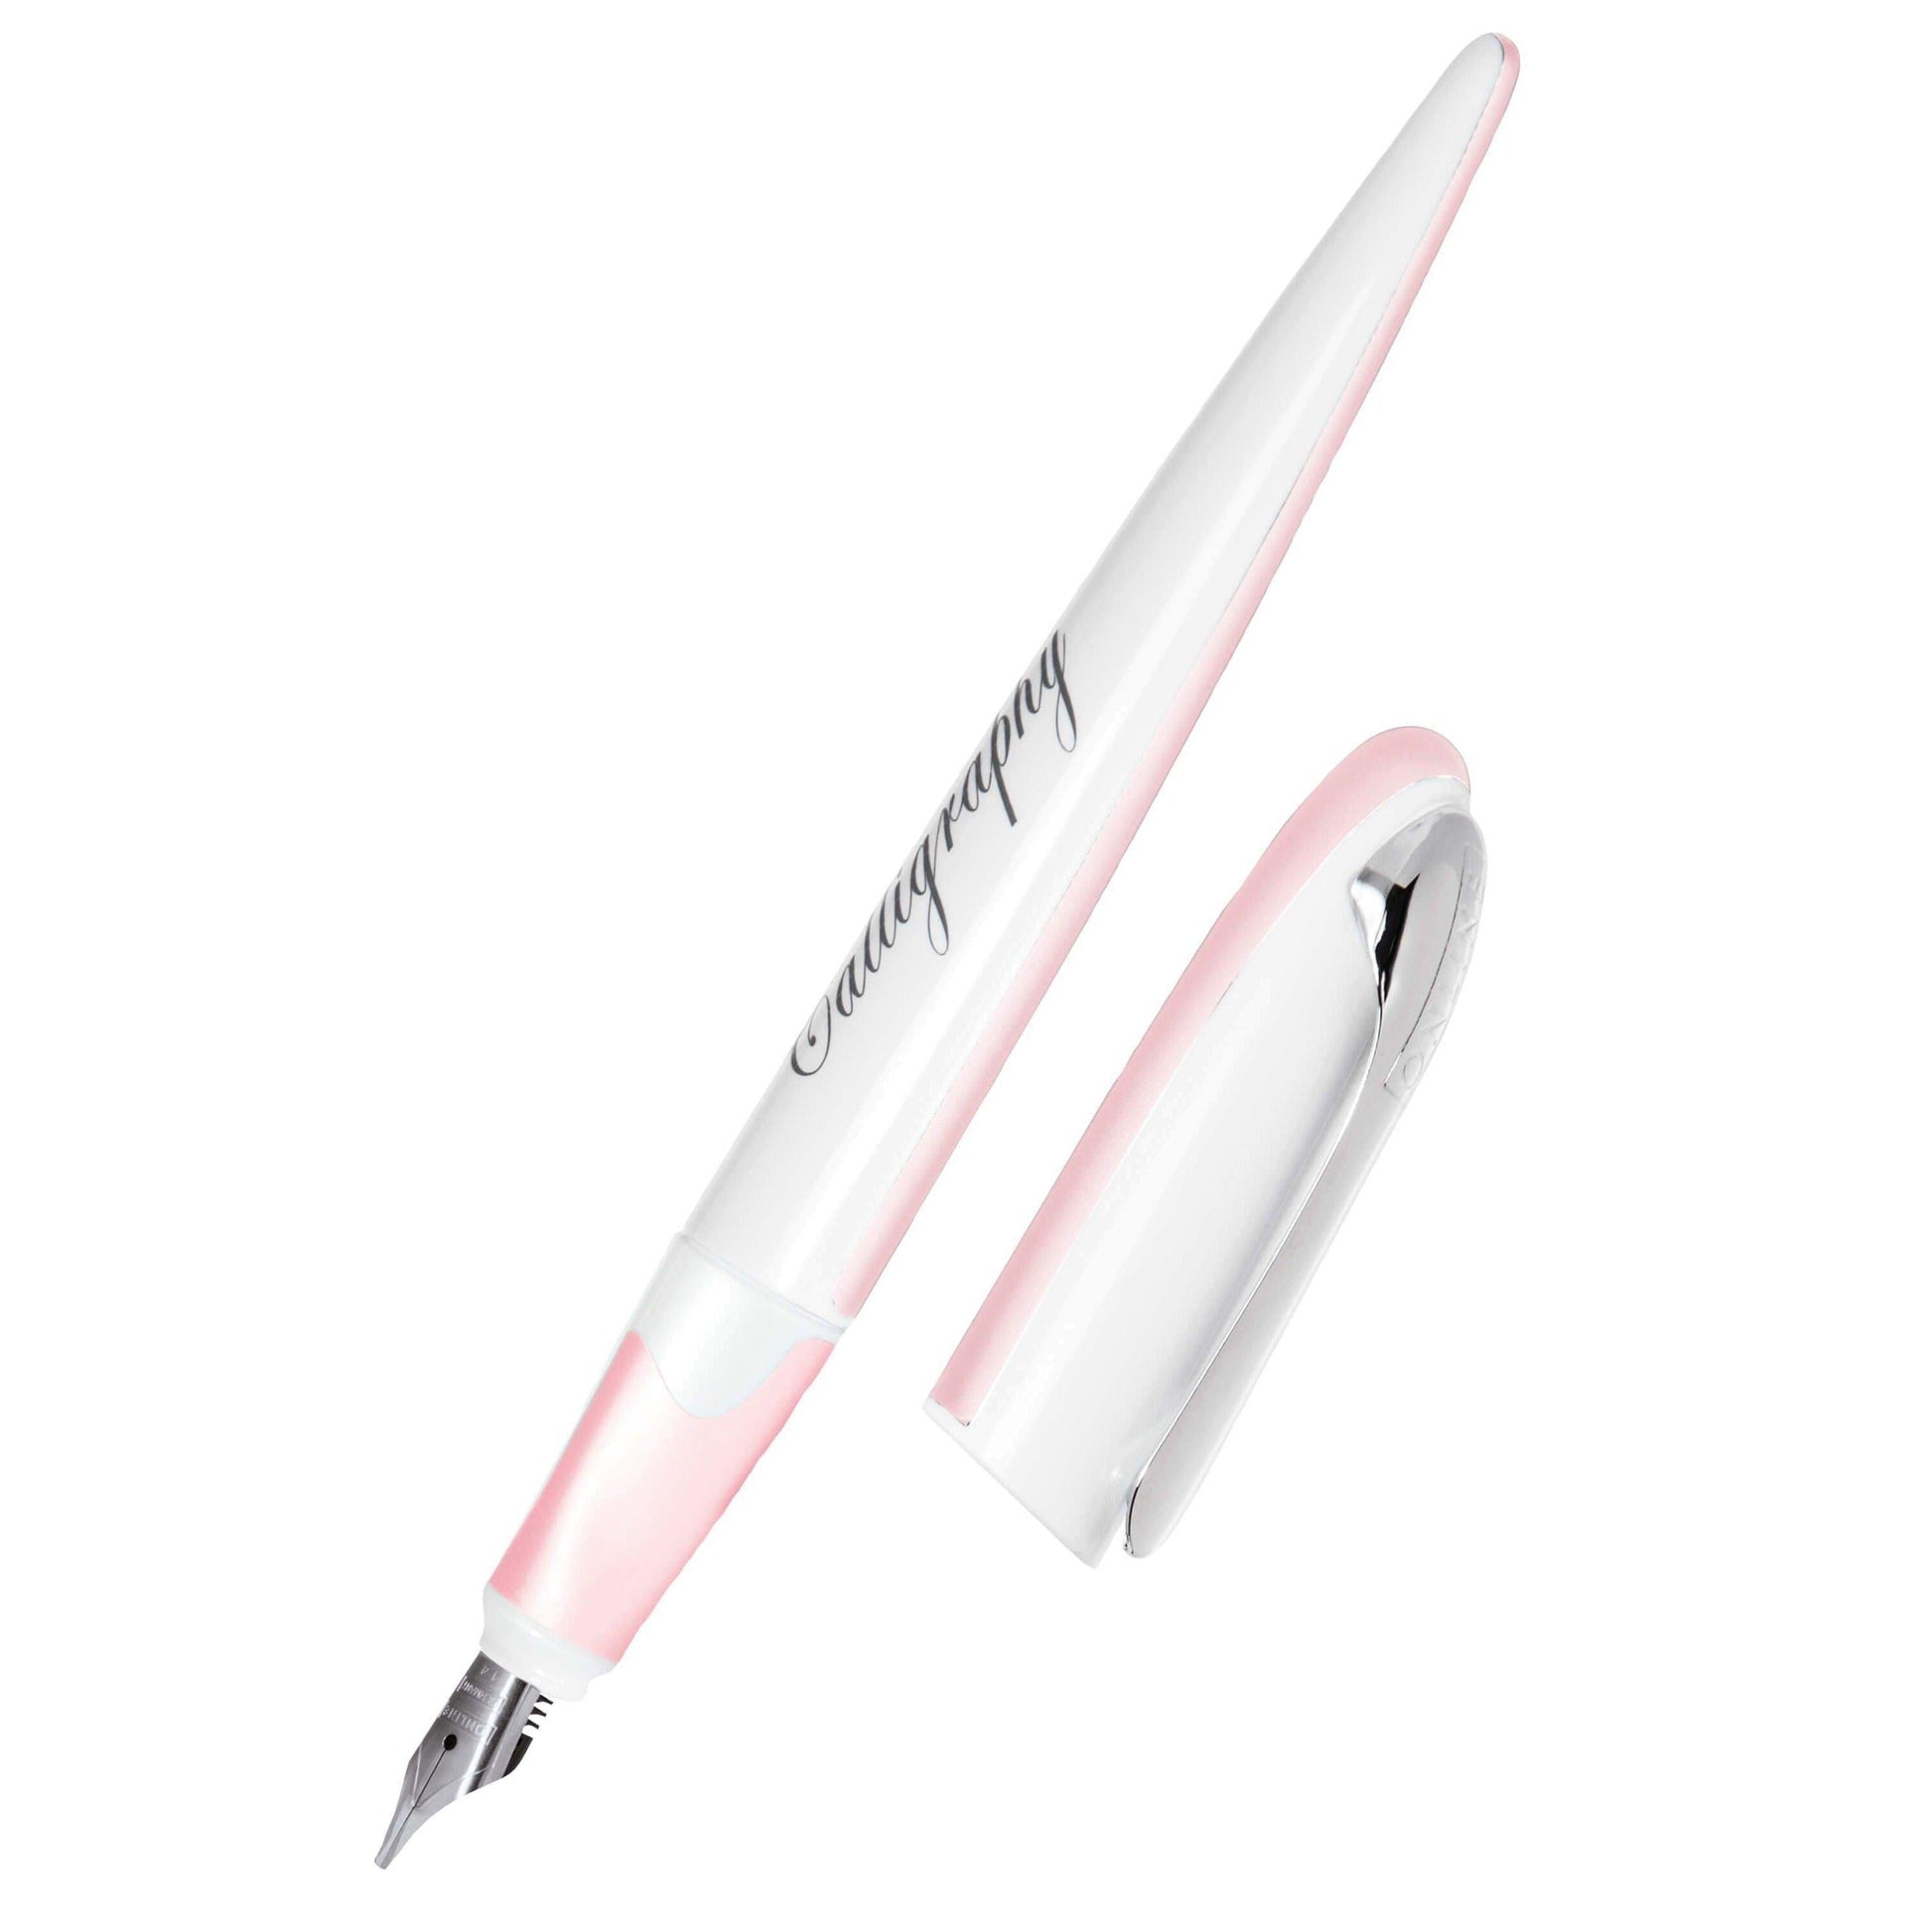 ONL Air Stylo Plume Calligraphique-Stylo Plume-Online-1.4 mm-Rose Pastel-Papeterie du Dôme